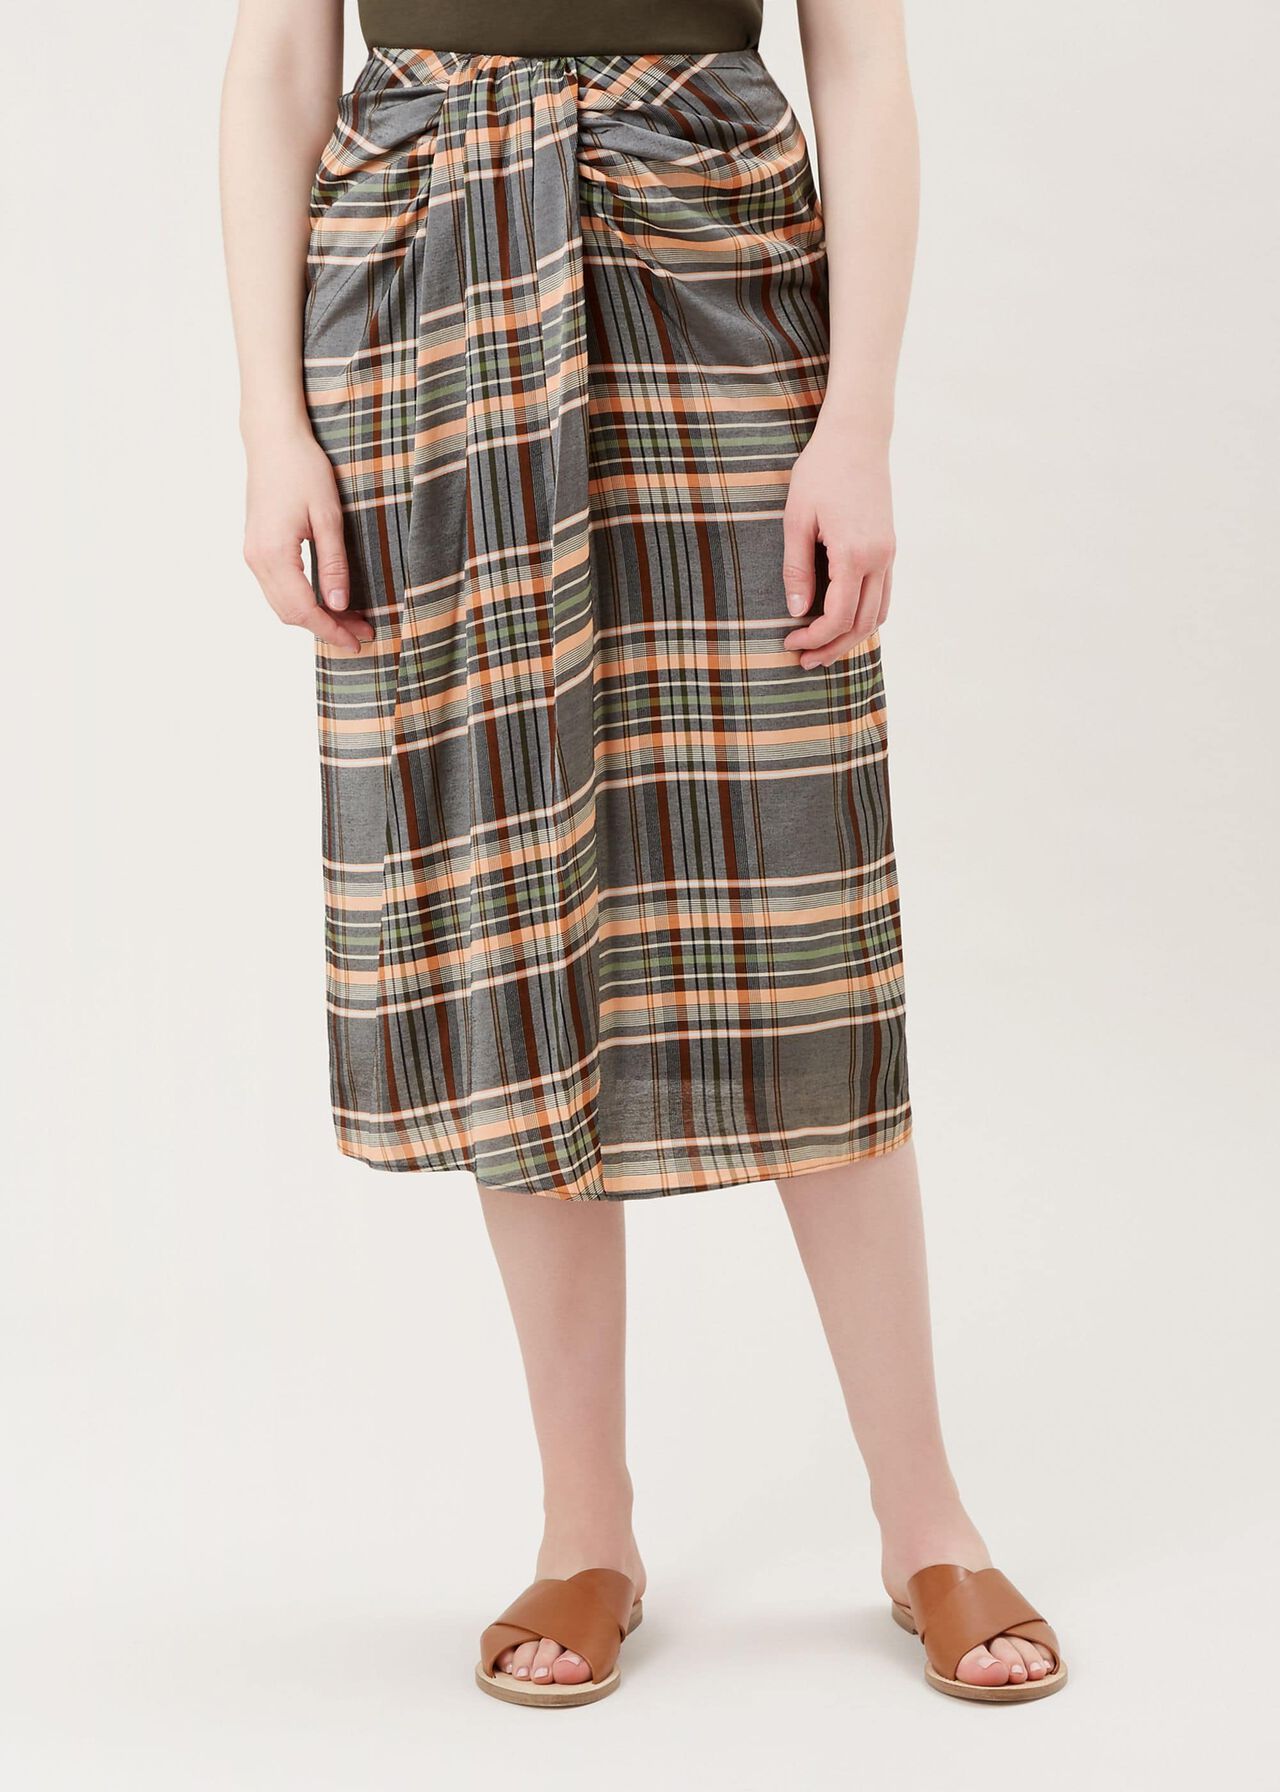 Bethany Skirt, Multi, hi-res